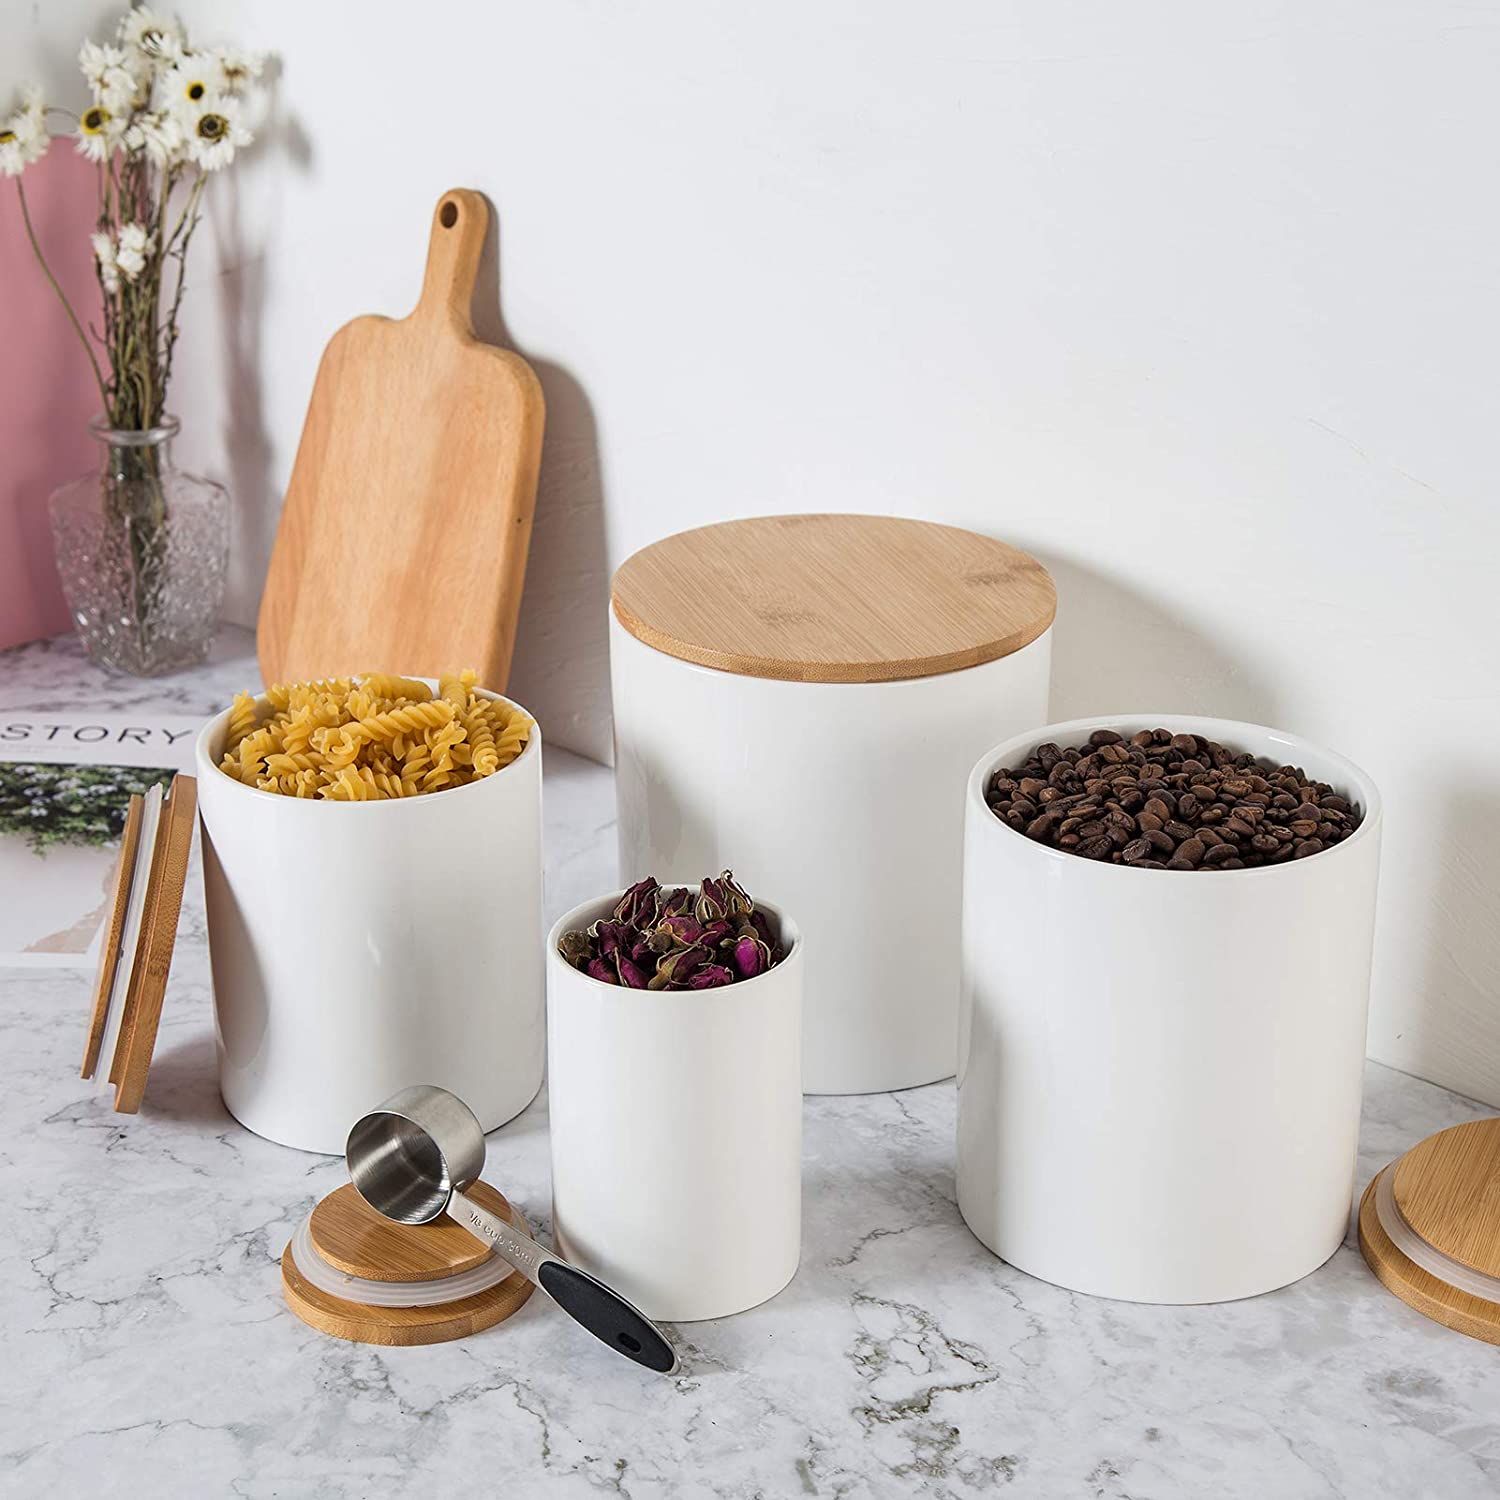 Mason Cookie Jar With Lid - Large Airtight Ceramic Kitchen